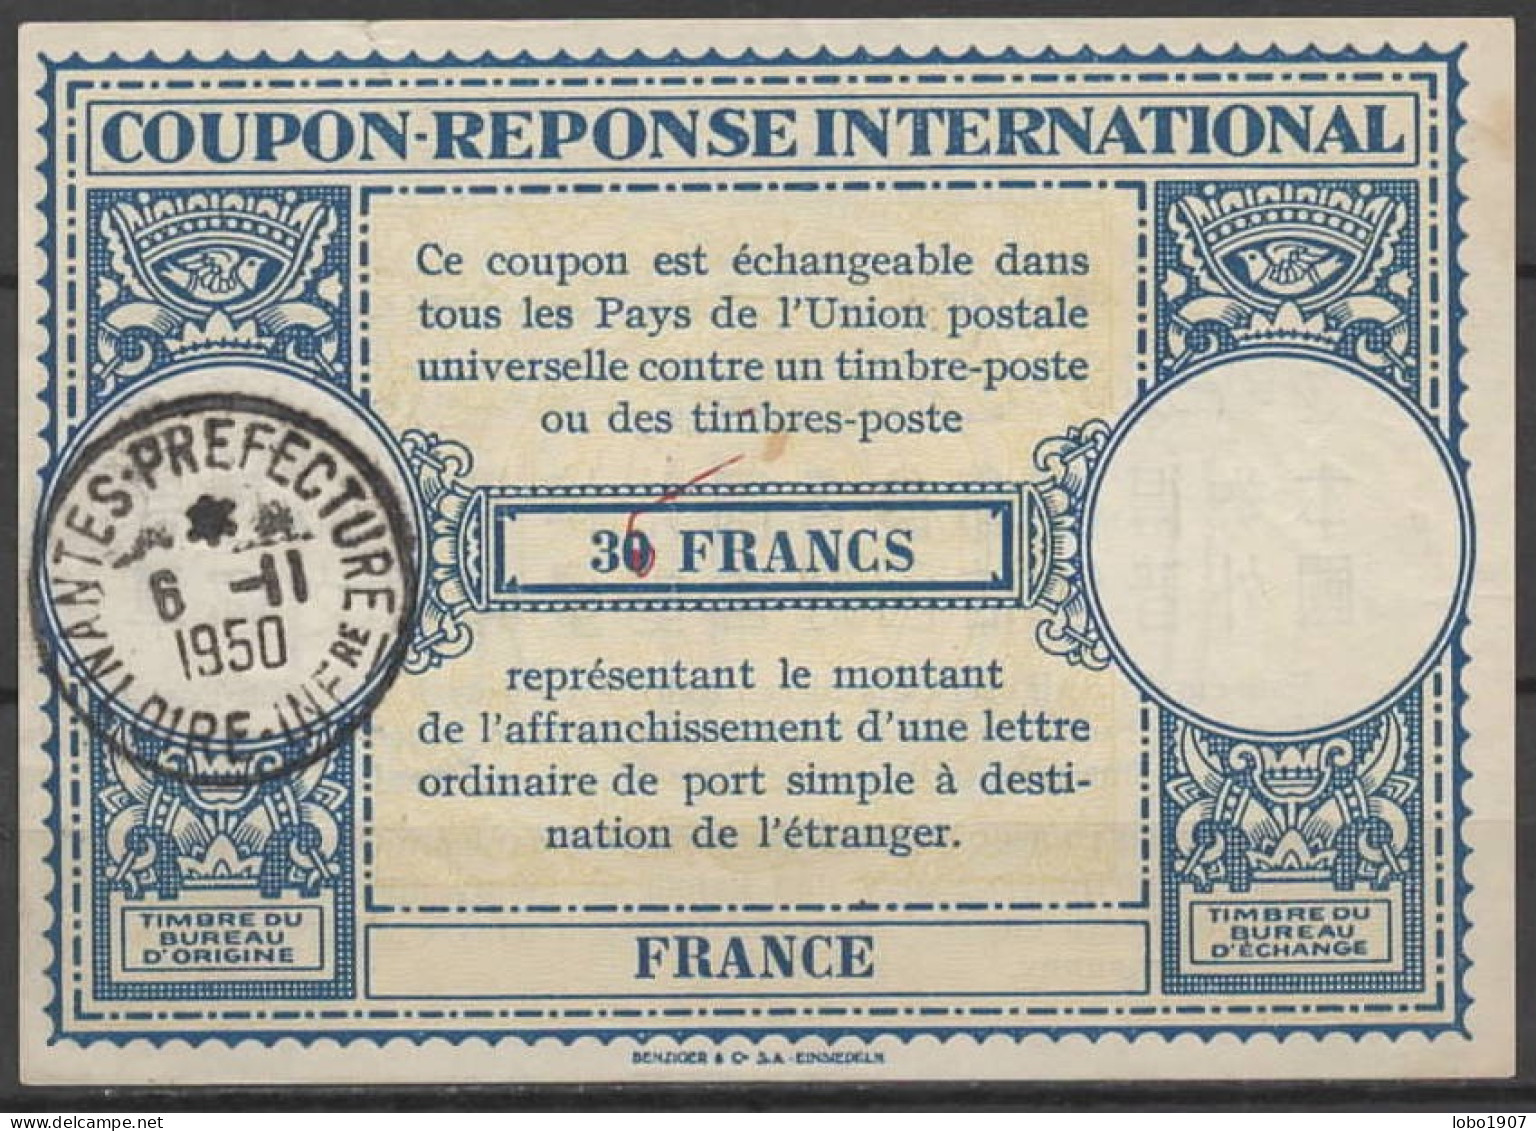 FRANCE Lo15 35 / 30 FRANCS International Reply Coupon Reponse Antwortschein IRC IAS O NANTES PREFECTURE 06.11.50 - Cupón-respuesta